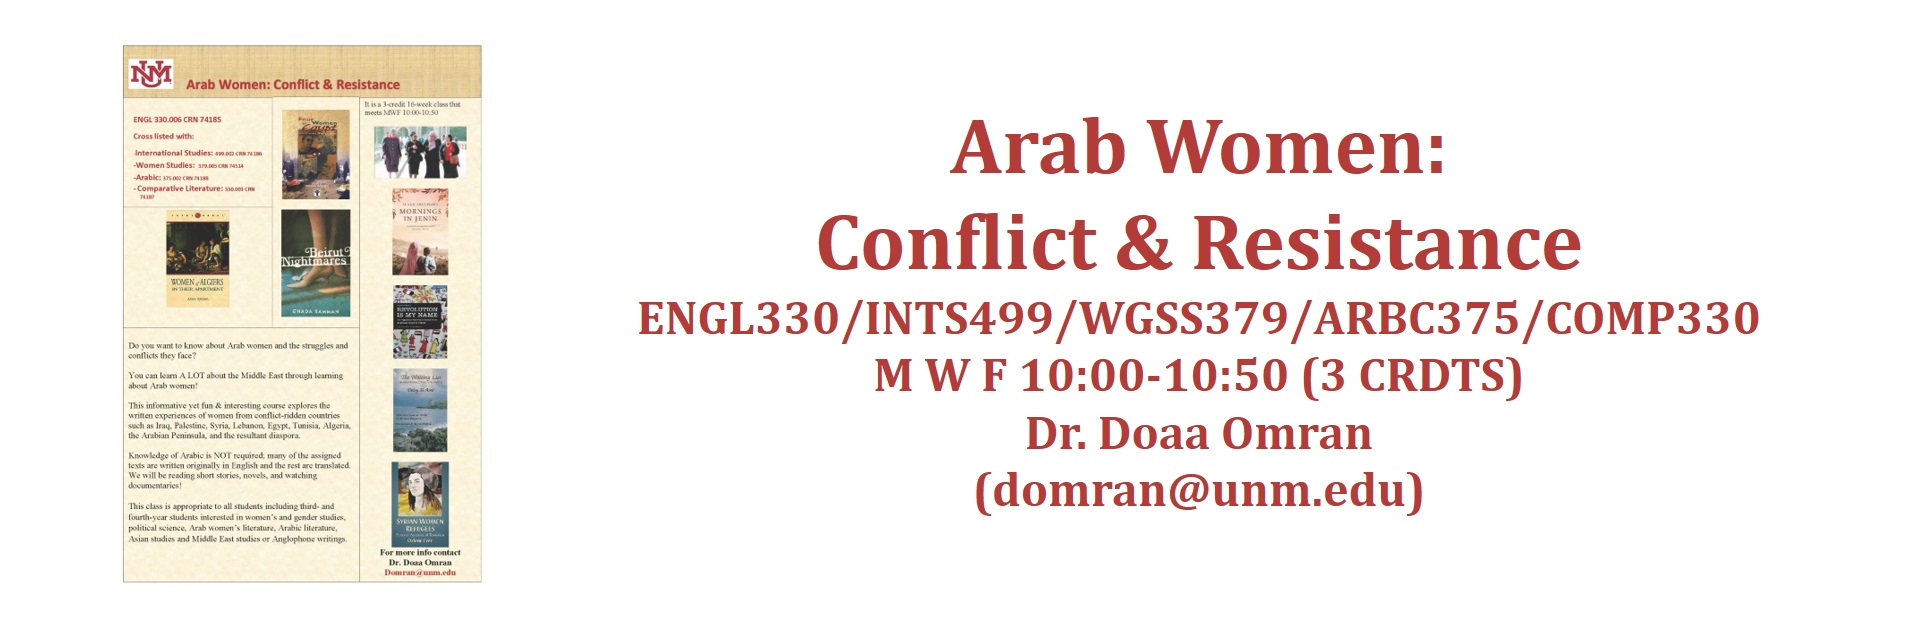 arab-women-conflict-resistance-pic